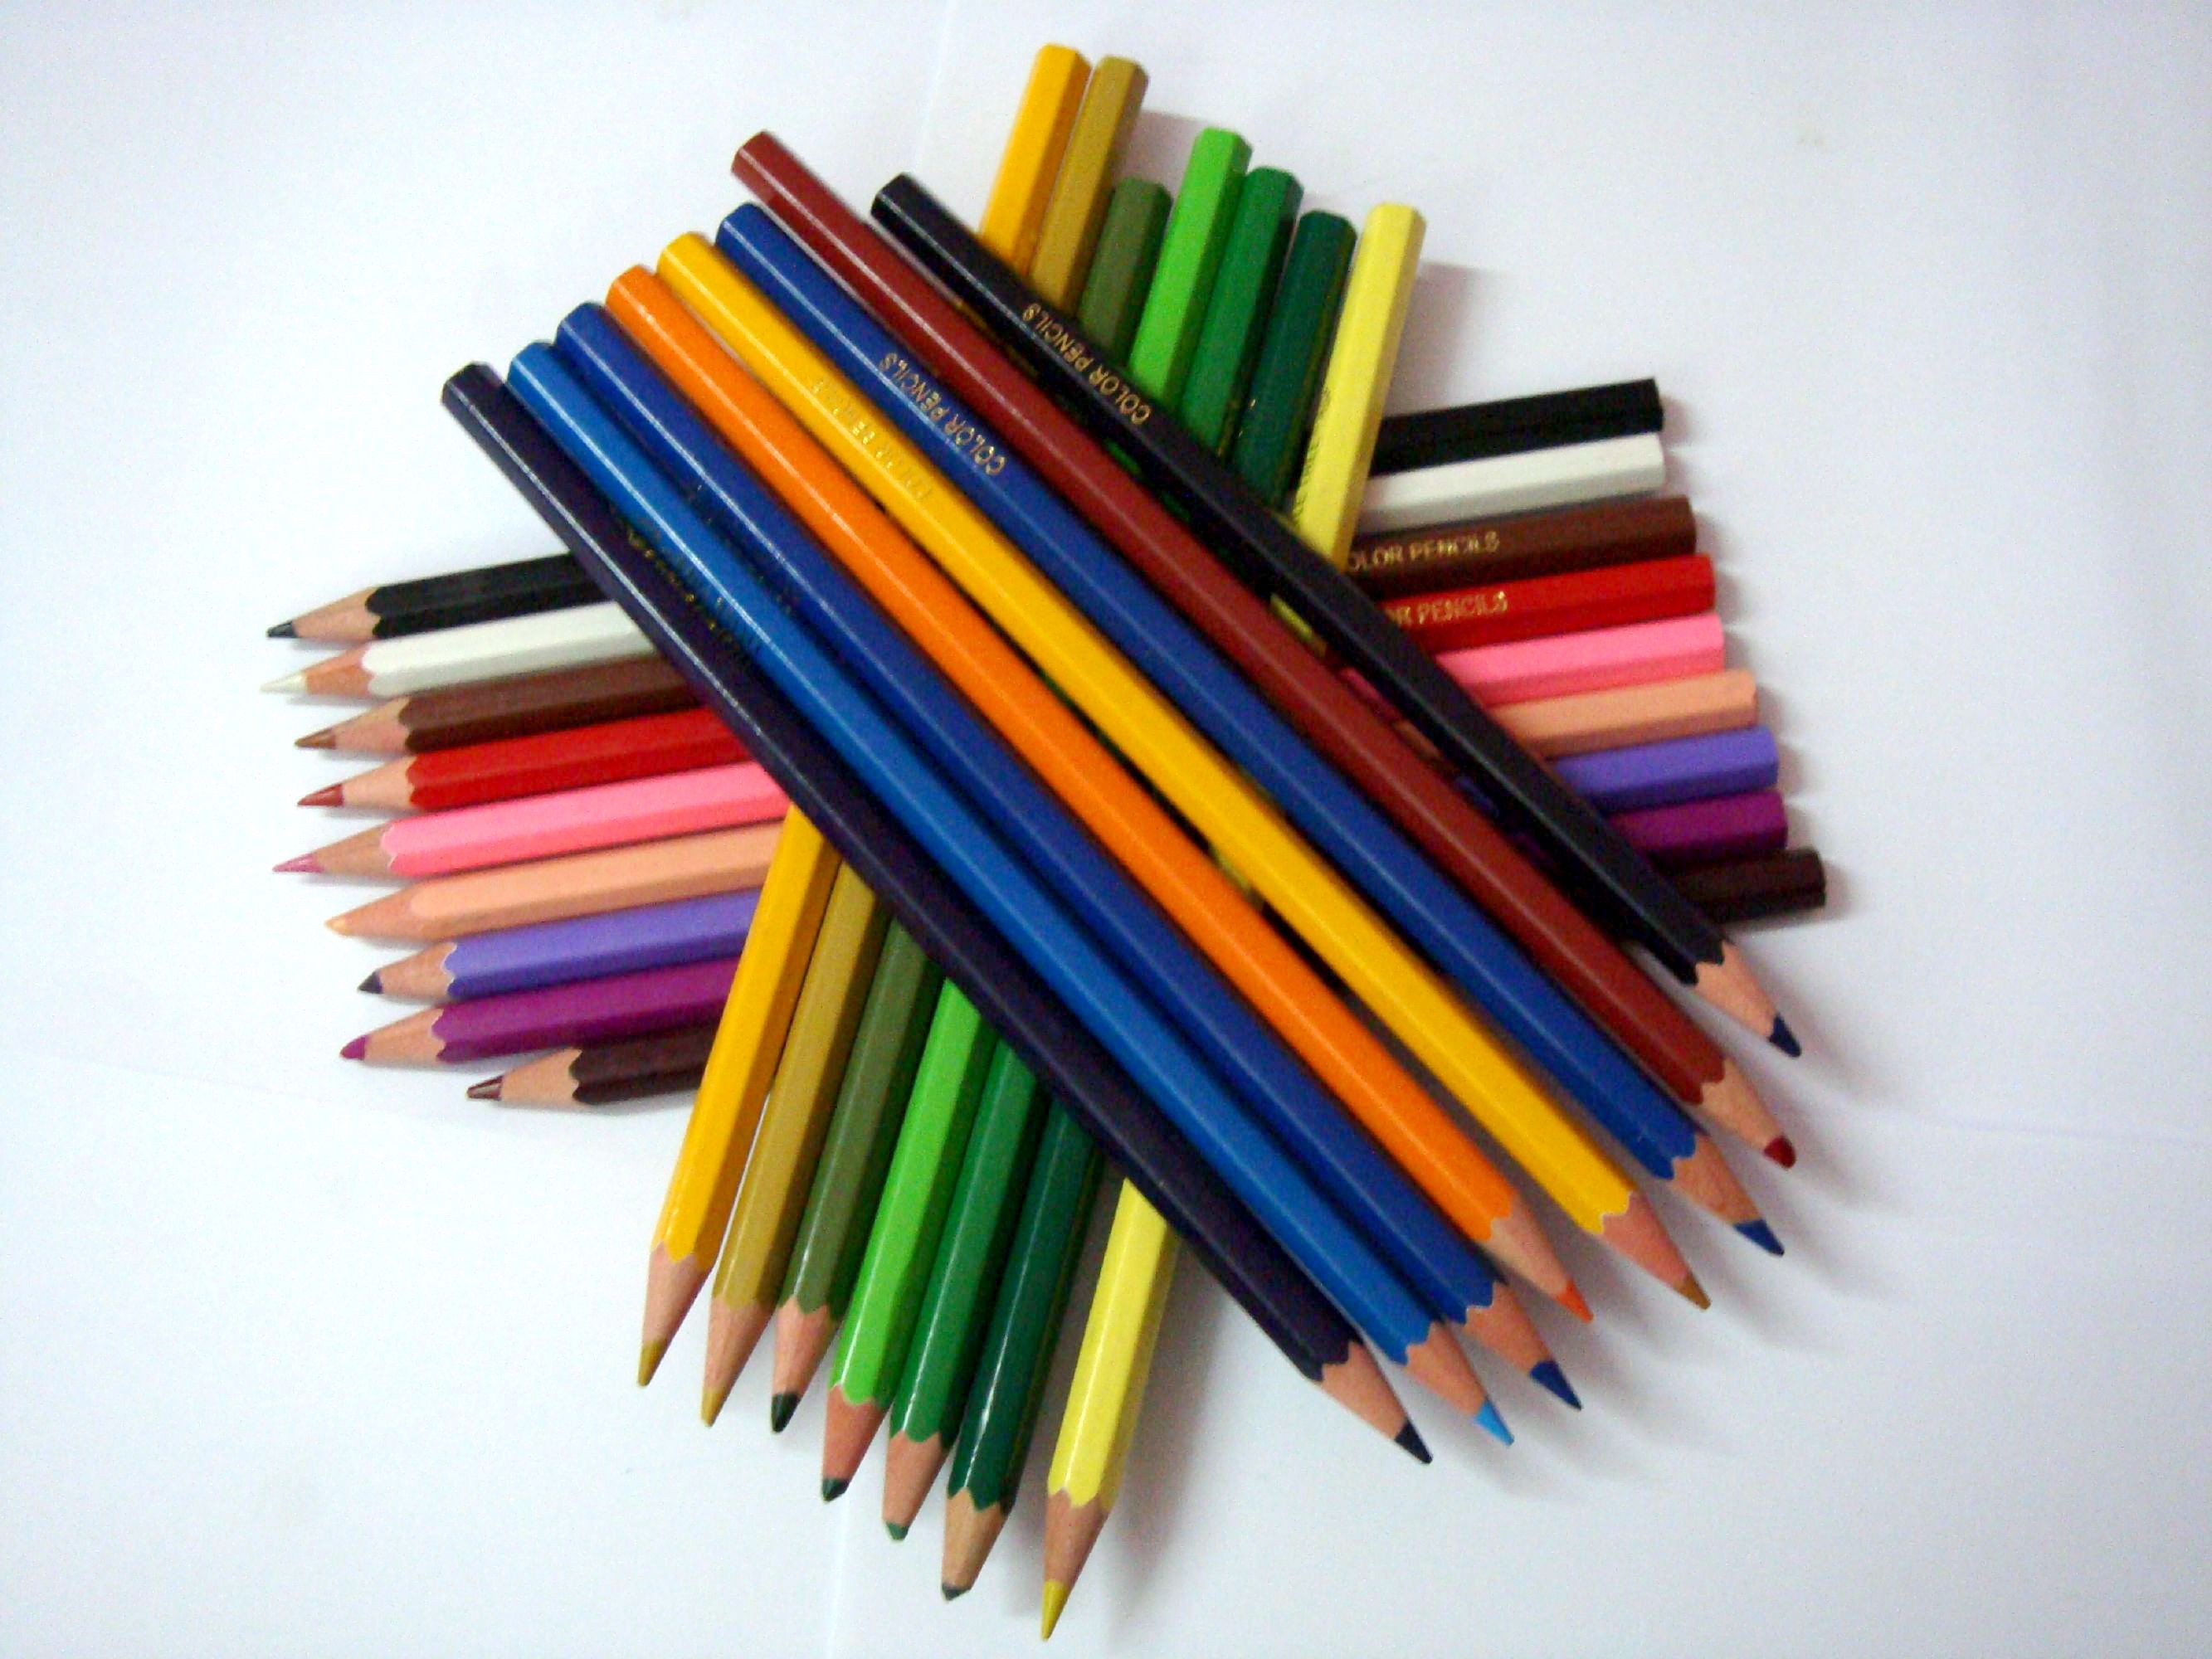 Pencil бесплатная. Color Pencil Art. Colorful Arts with Pencils. Pencils Creative. Office Pencil.